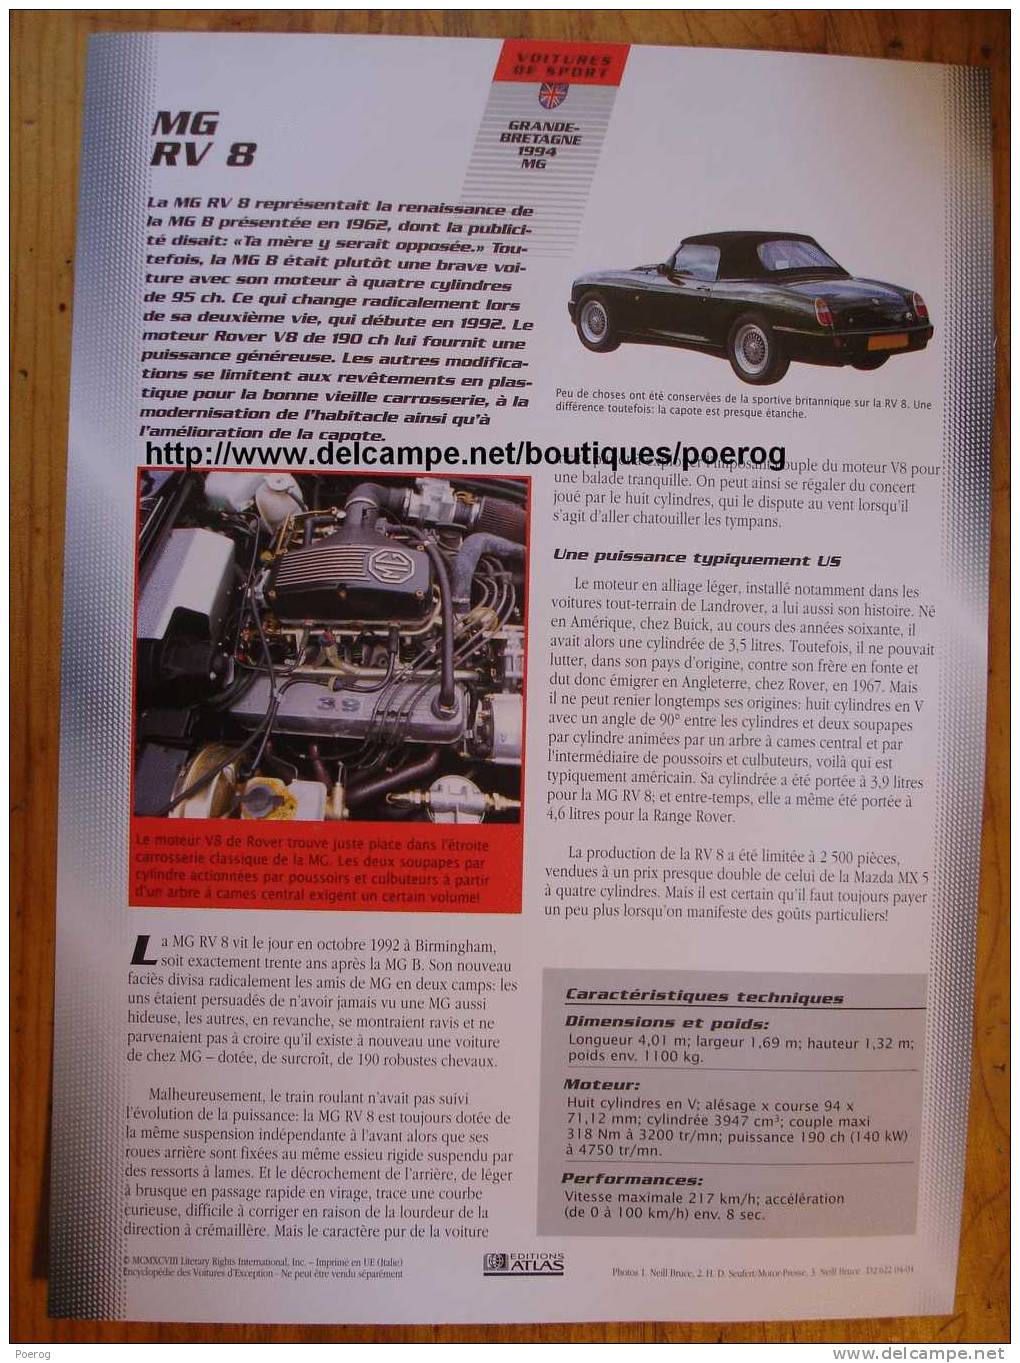 MG RV 8 - FICHE VOITURE GRAND FORMAT (A4) - 1998 - Auto Automobile Automobiles Voitures Car Cars - Automobili